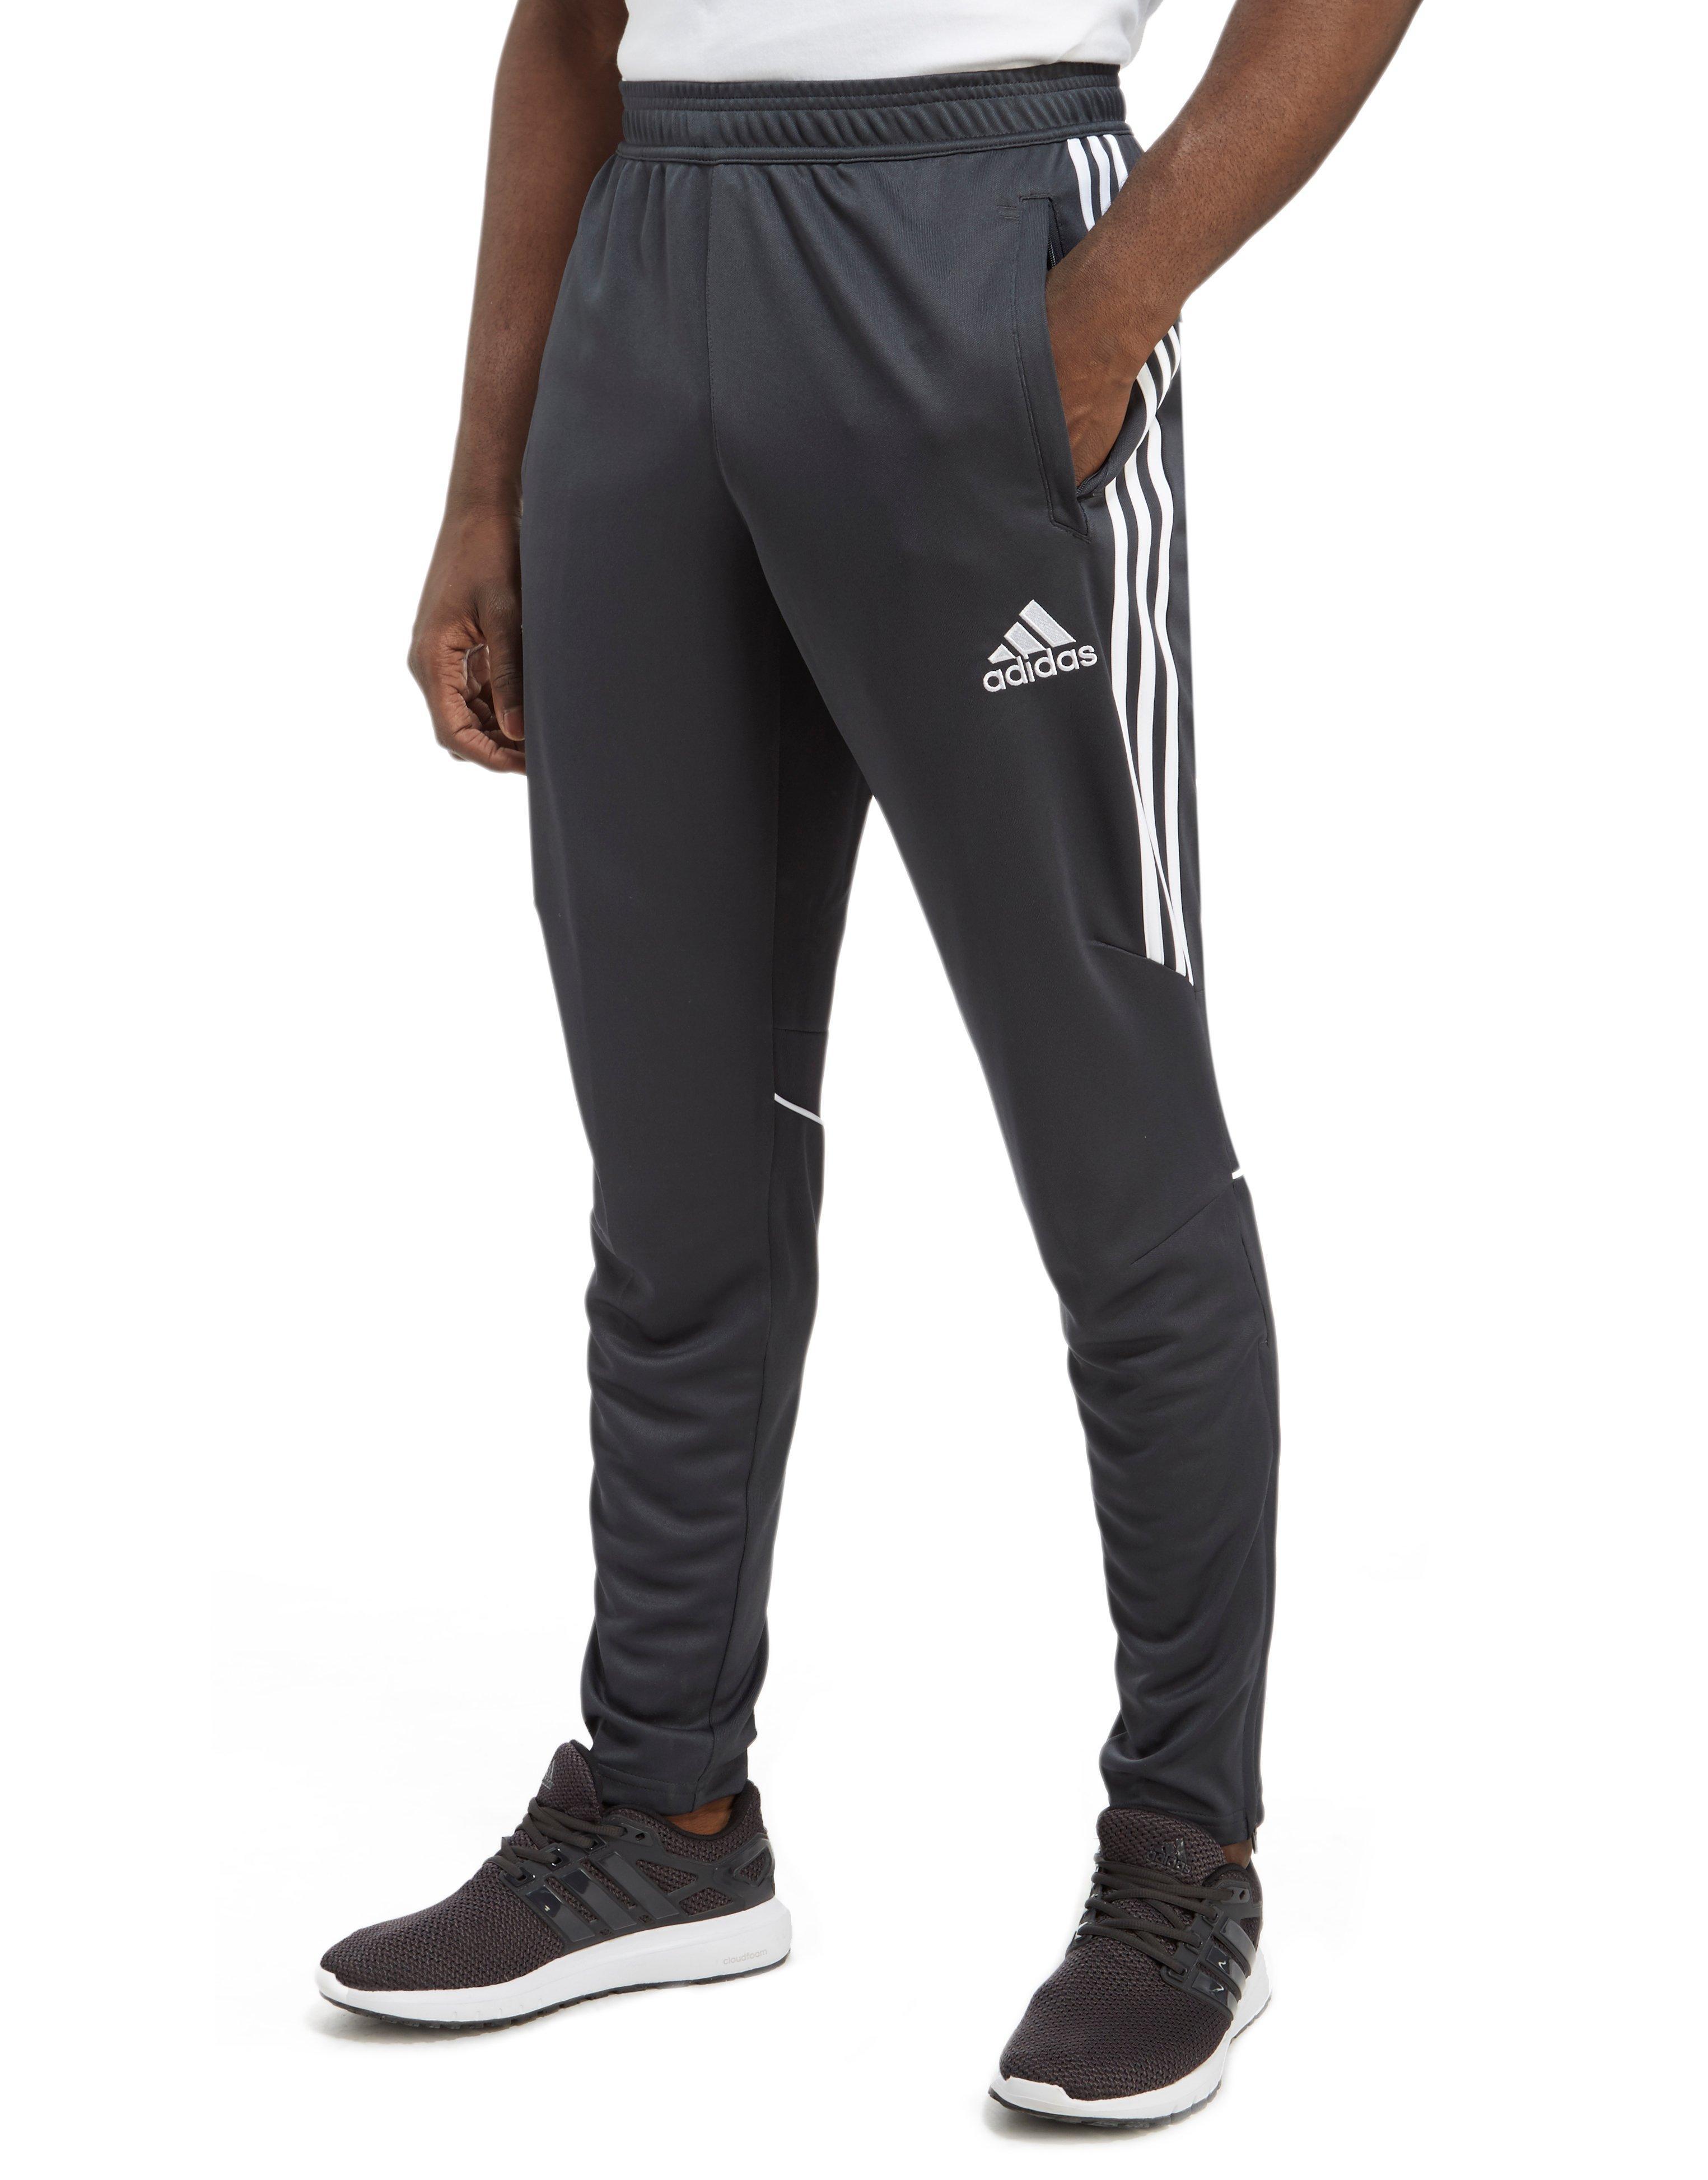 Lyst - Adidas Originals Tango Pants in Gray for Men